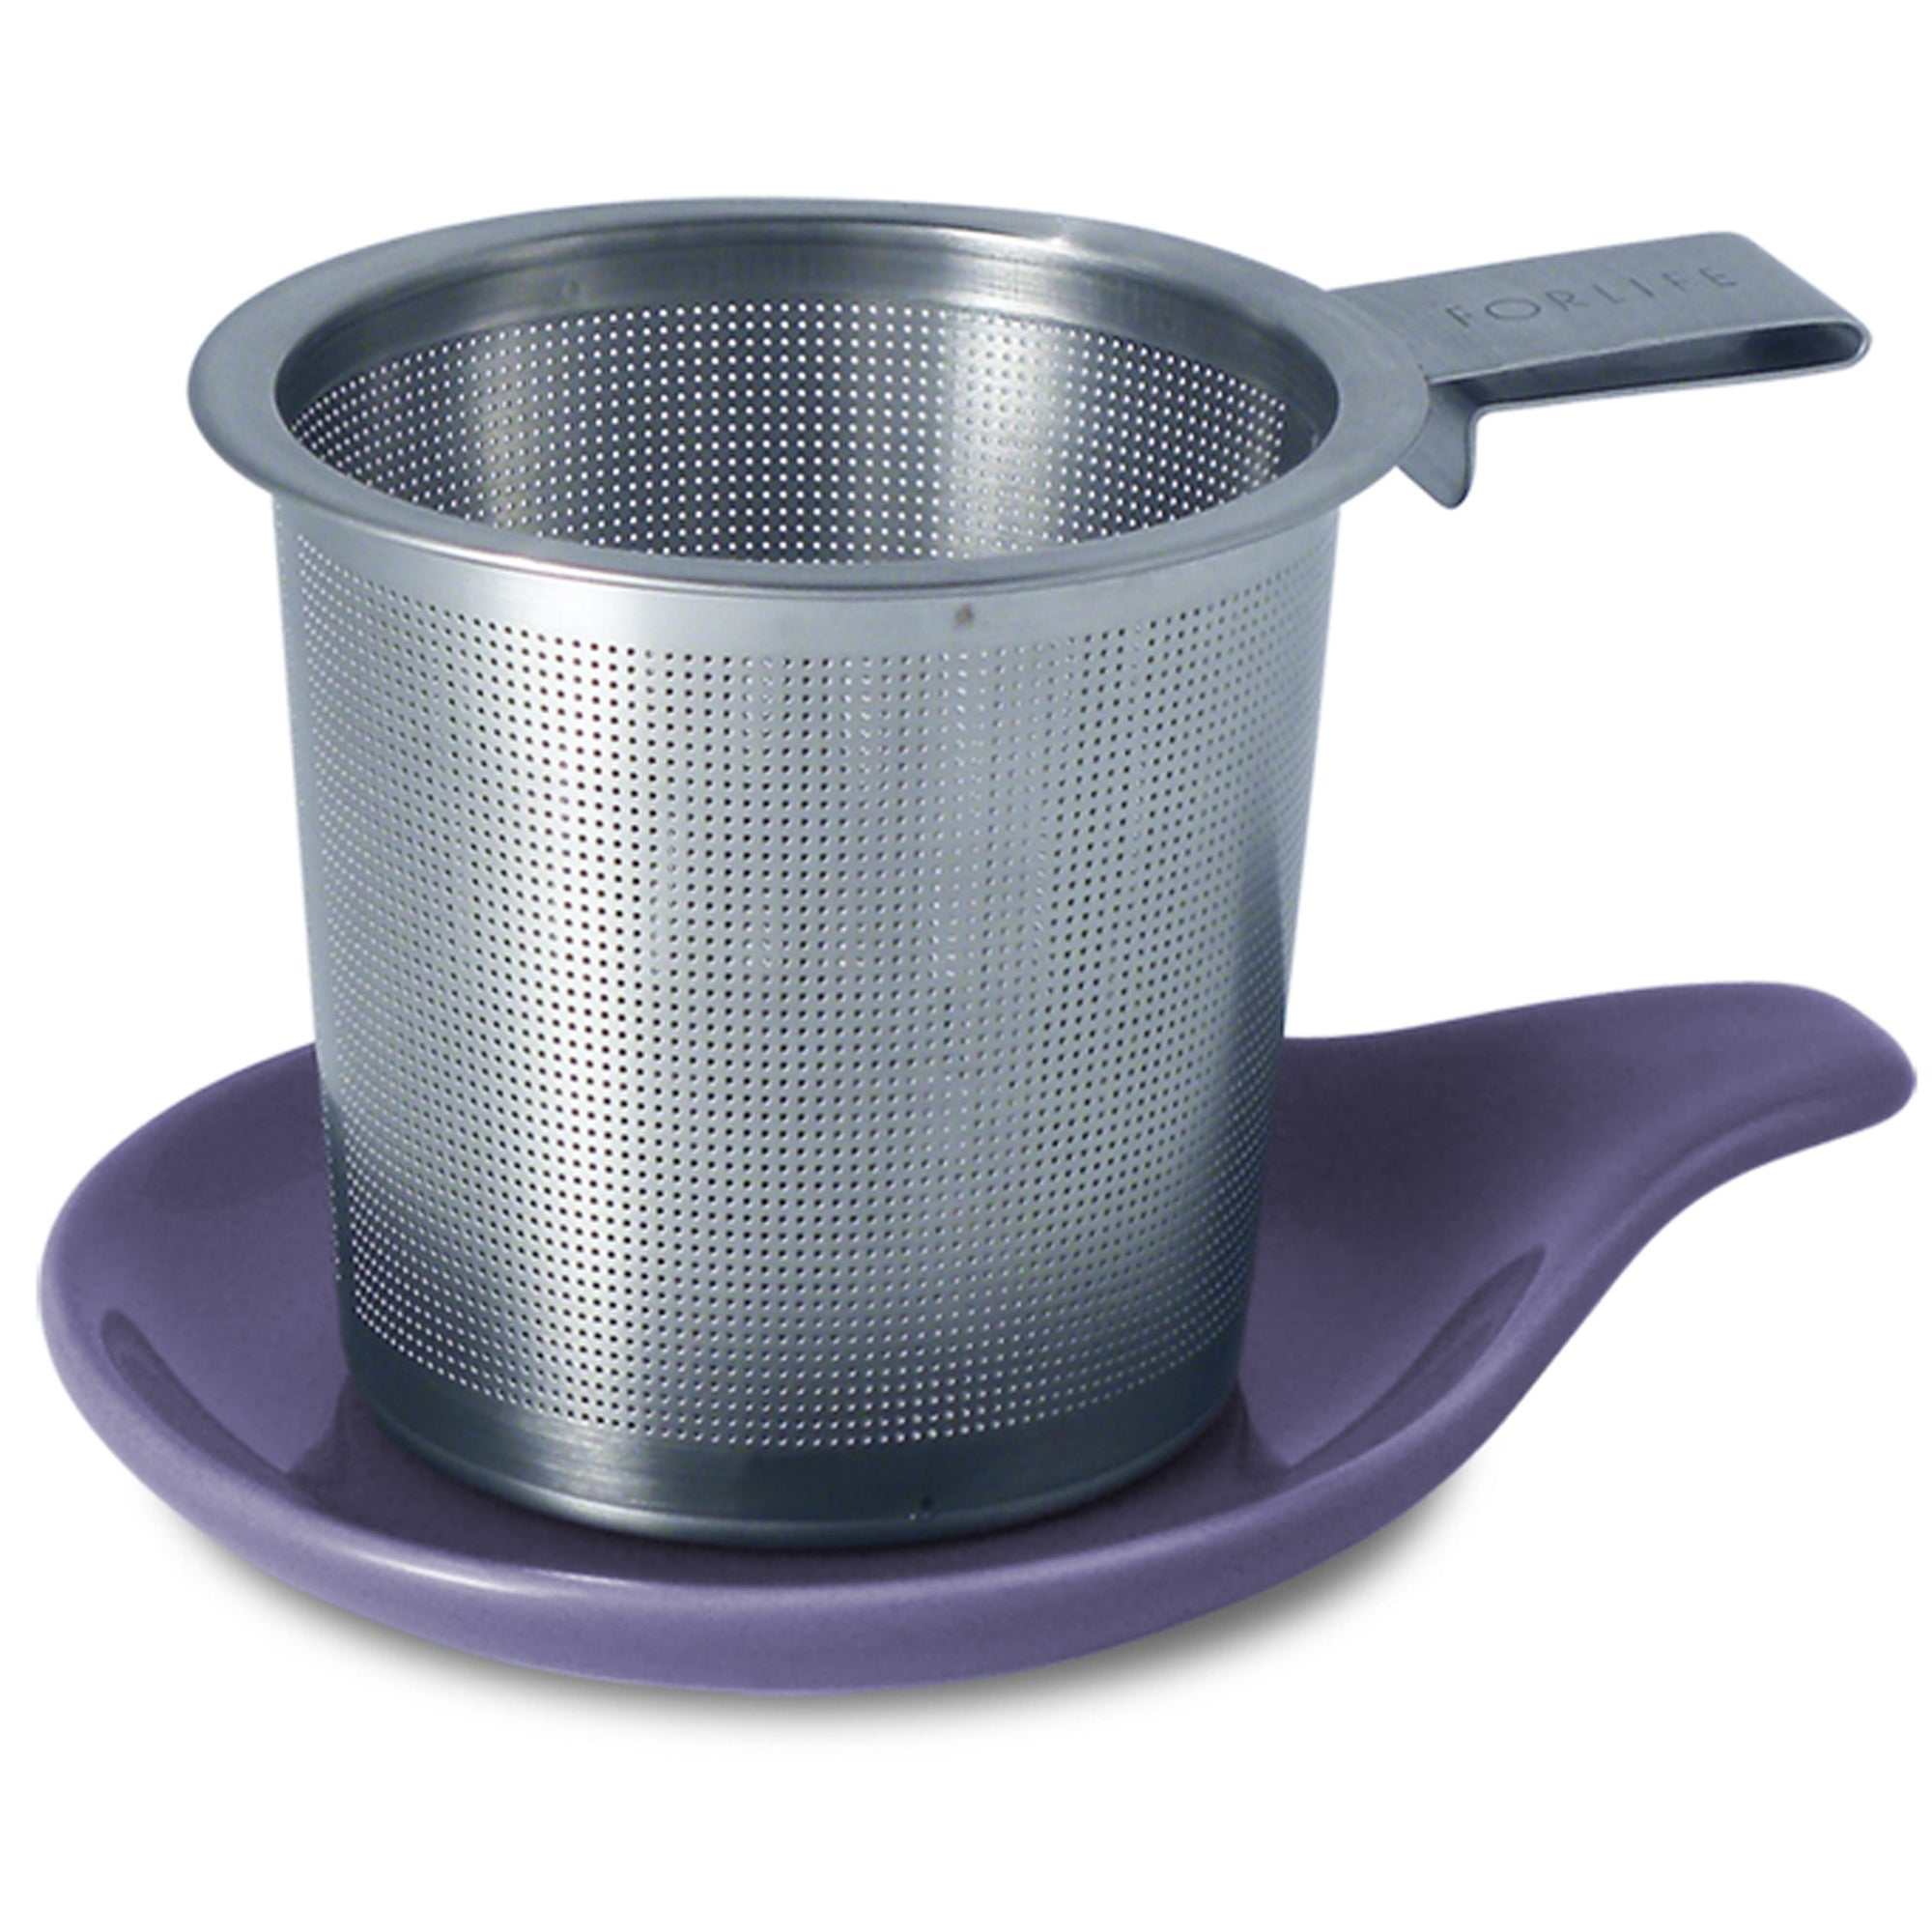 Hook Handle Tea Infuser & Dish Set